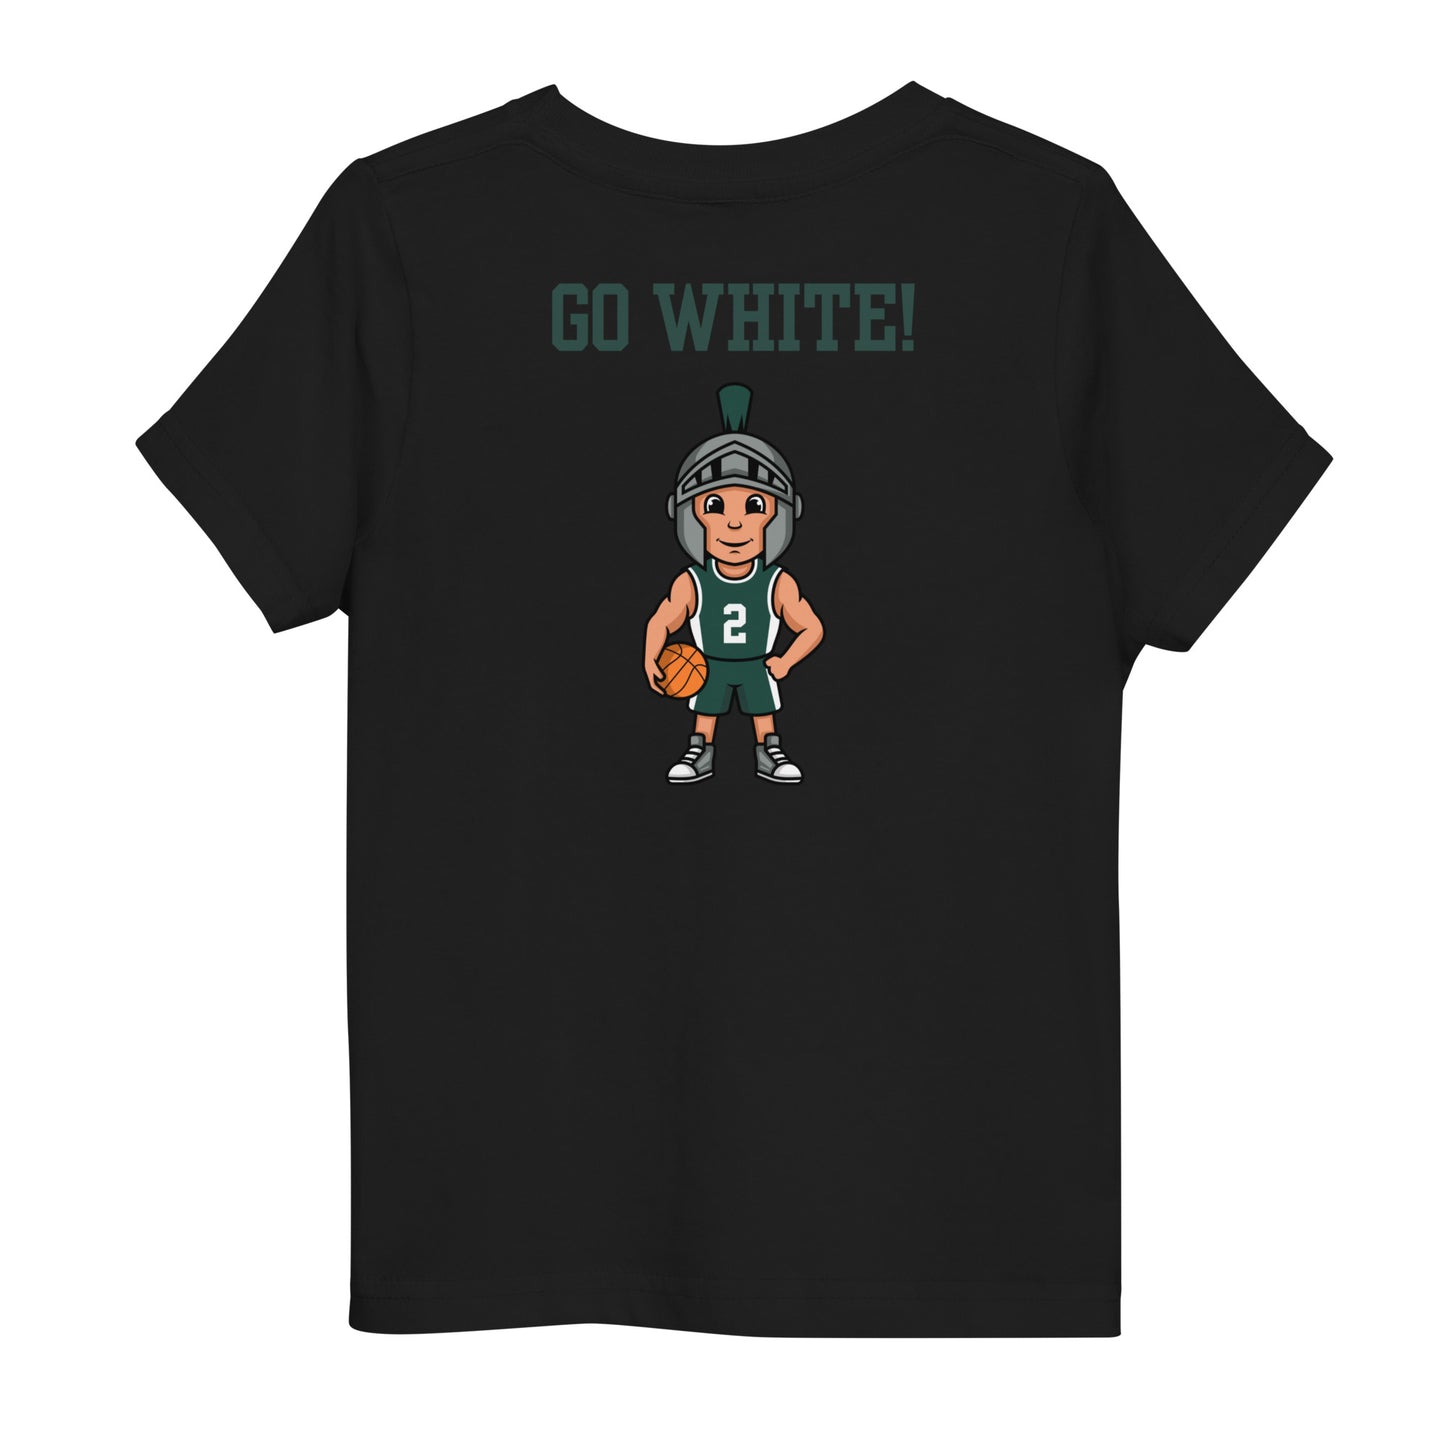 Go Green Go White Toddler jersey t-shirt